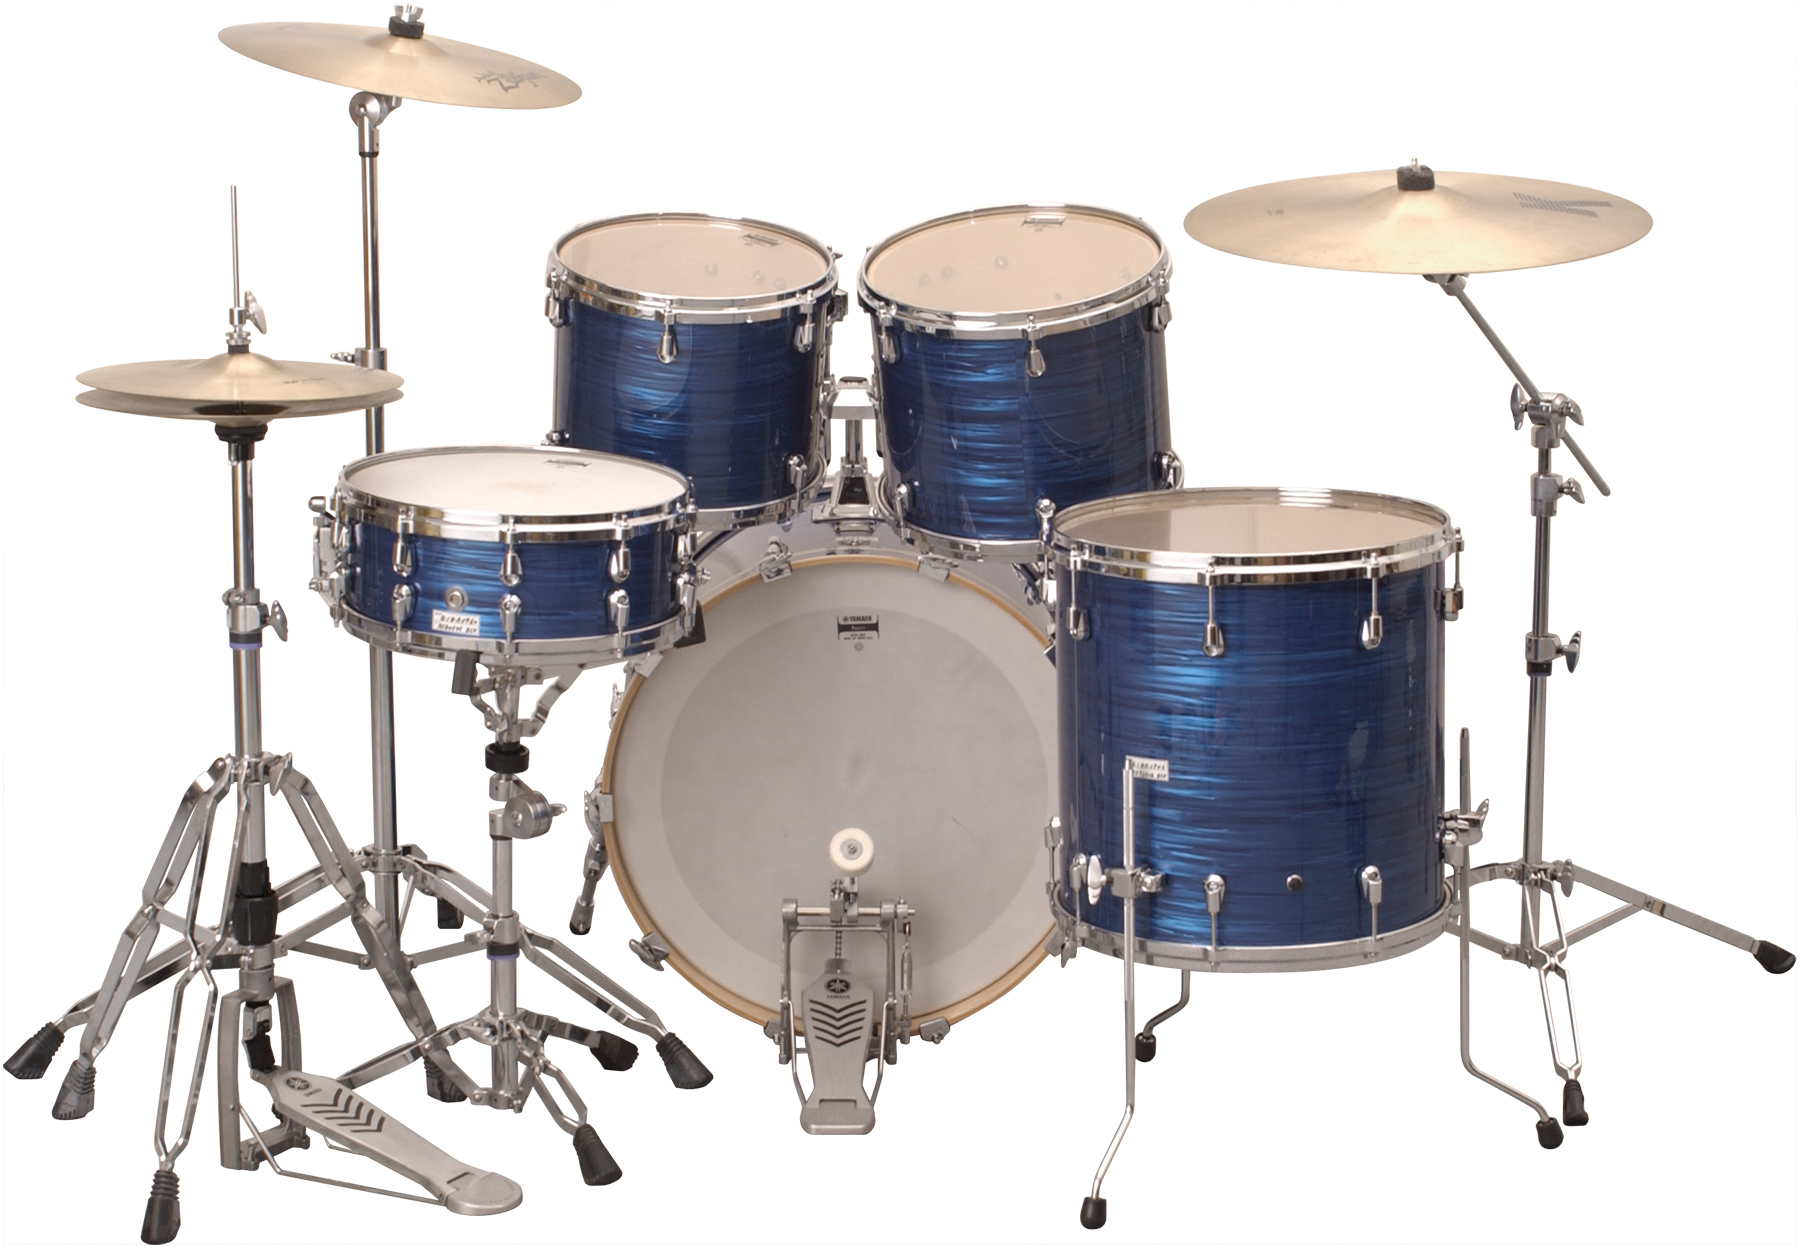 buy fl studio drum kits